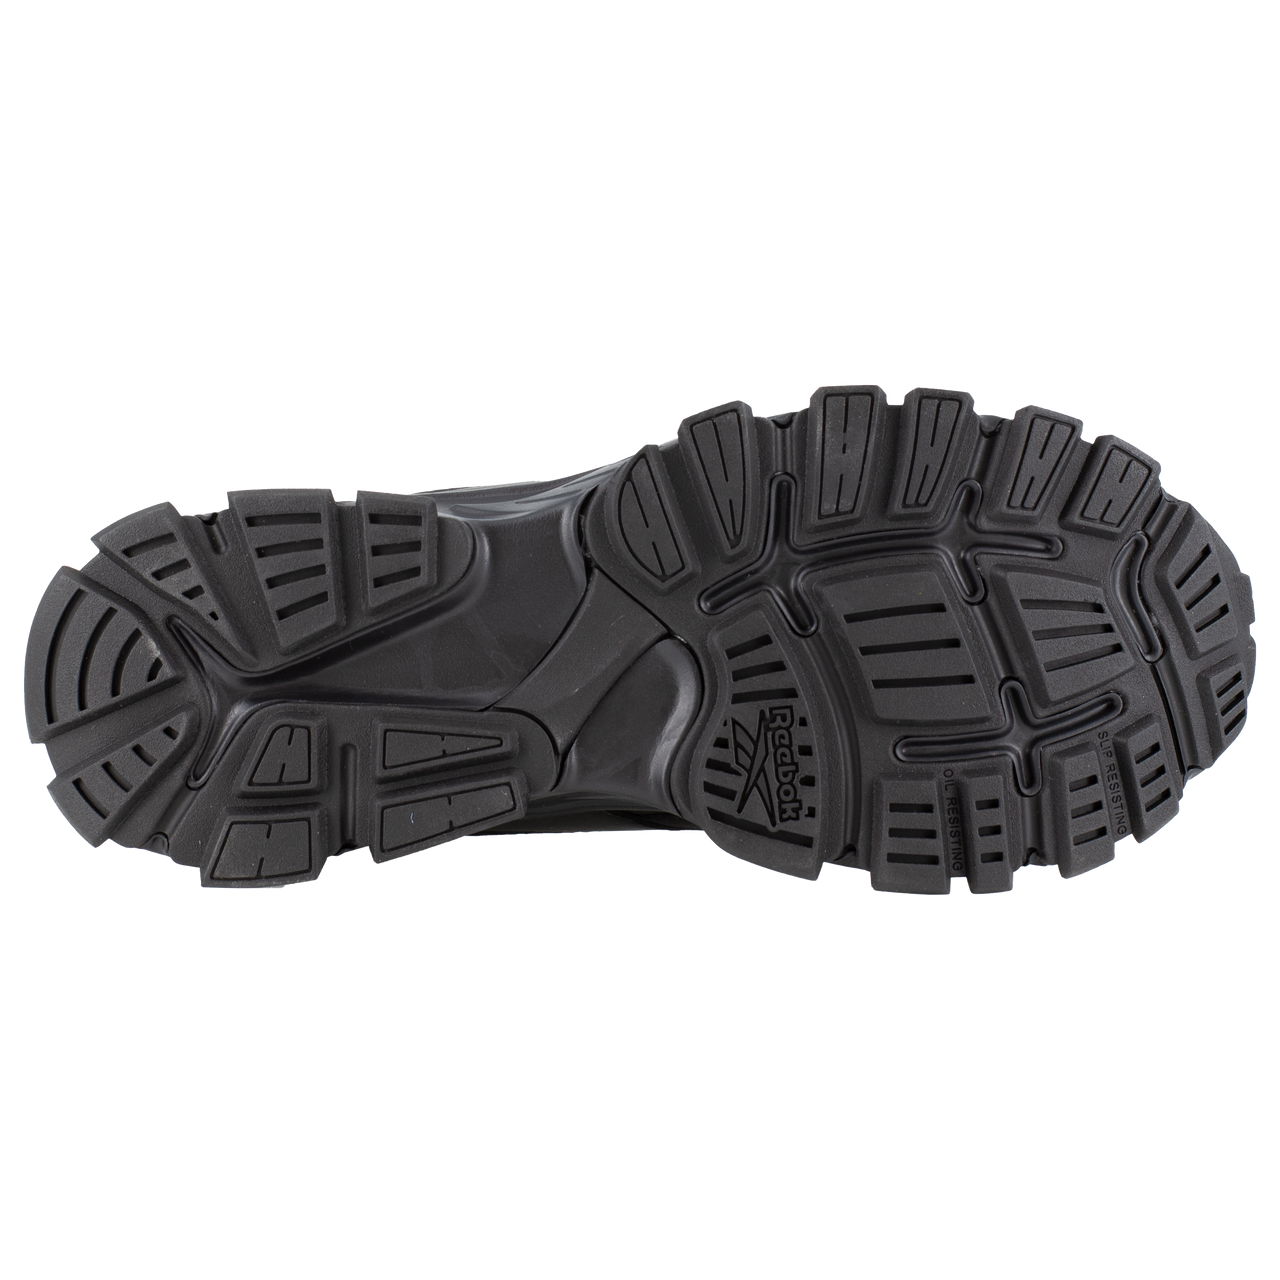 Reebok Tactical Hyperium Tactical 6" Men's Boot with Soft Toe - Black Tactical Gear Australia Supplier Distributor Dealer